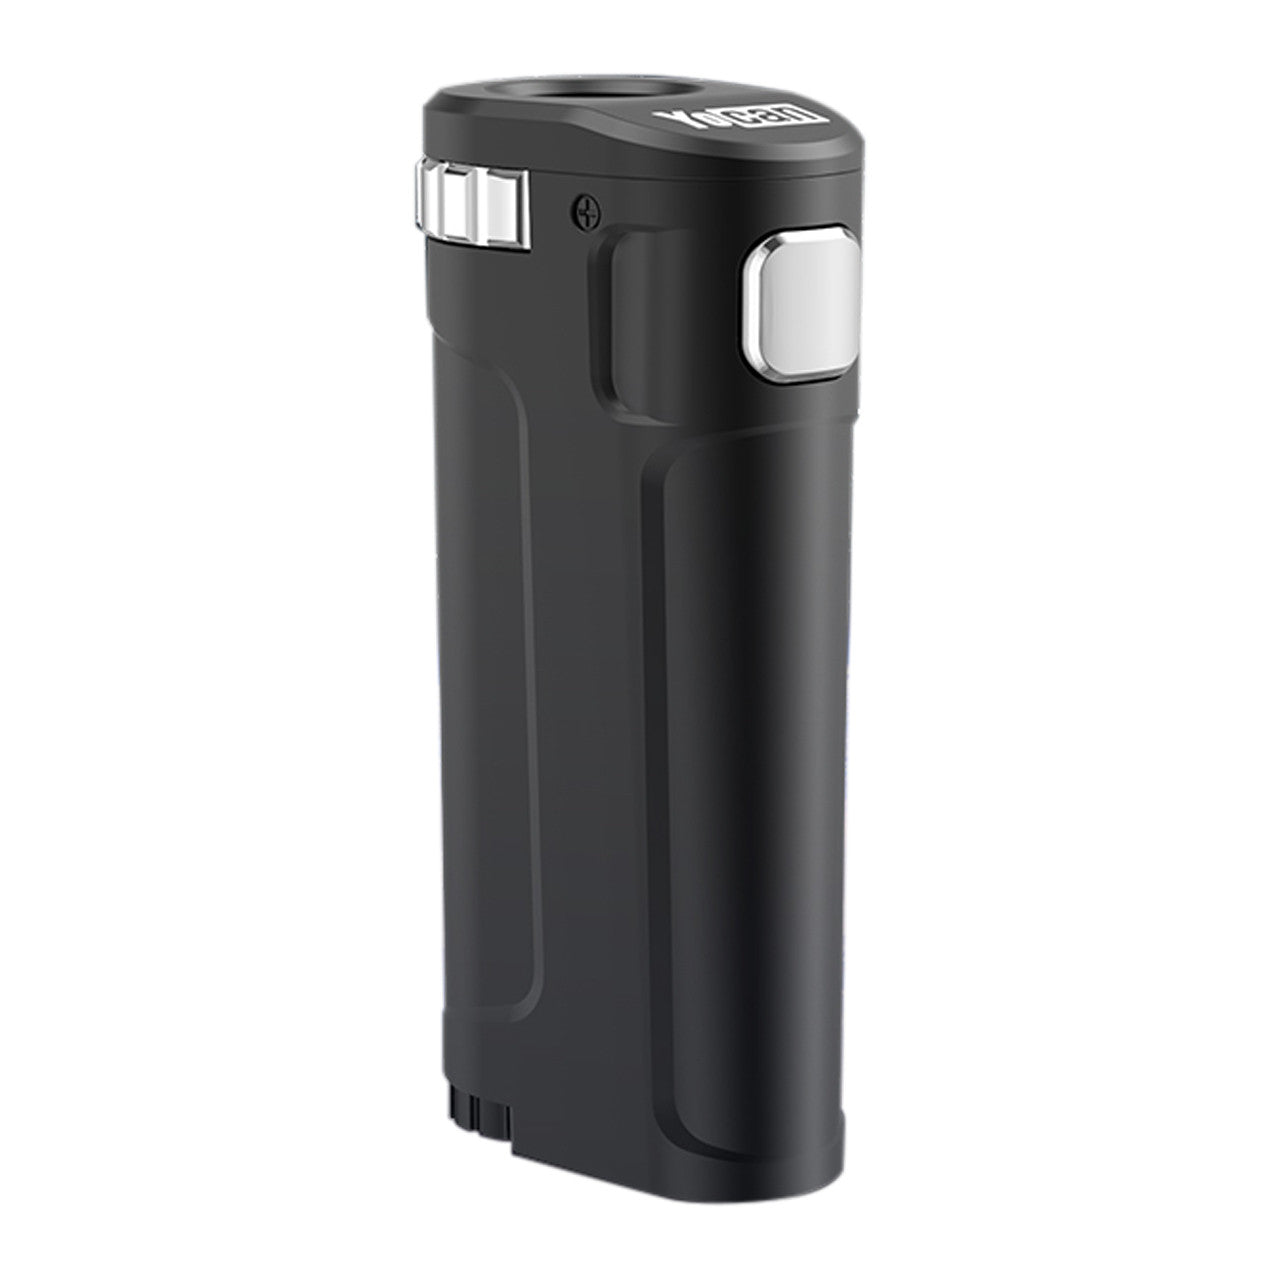 Yocan - UNI Twist 650mAh Universal Carto Battery Mod - Online Vape Shop | Alternative pods | Affordable Vapor Store | Vape Disposables